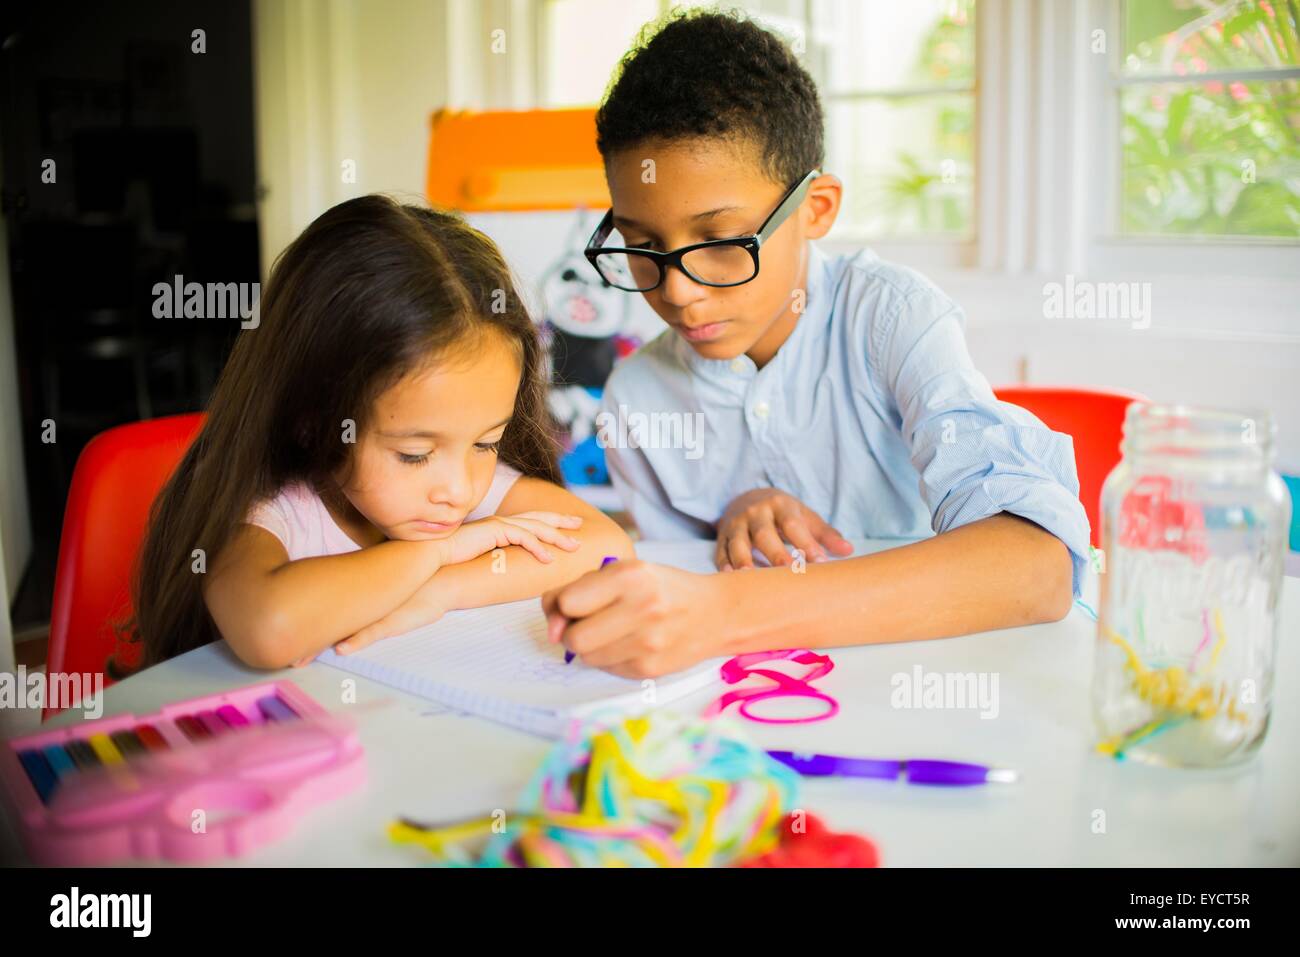 Boy and girl crayon drawing at kitchen table Stock Photo